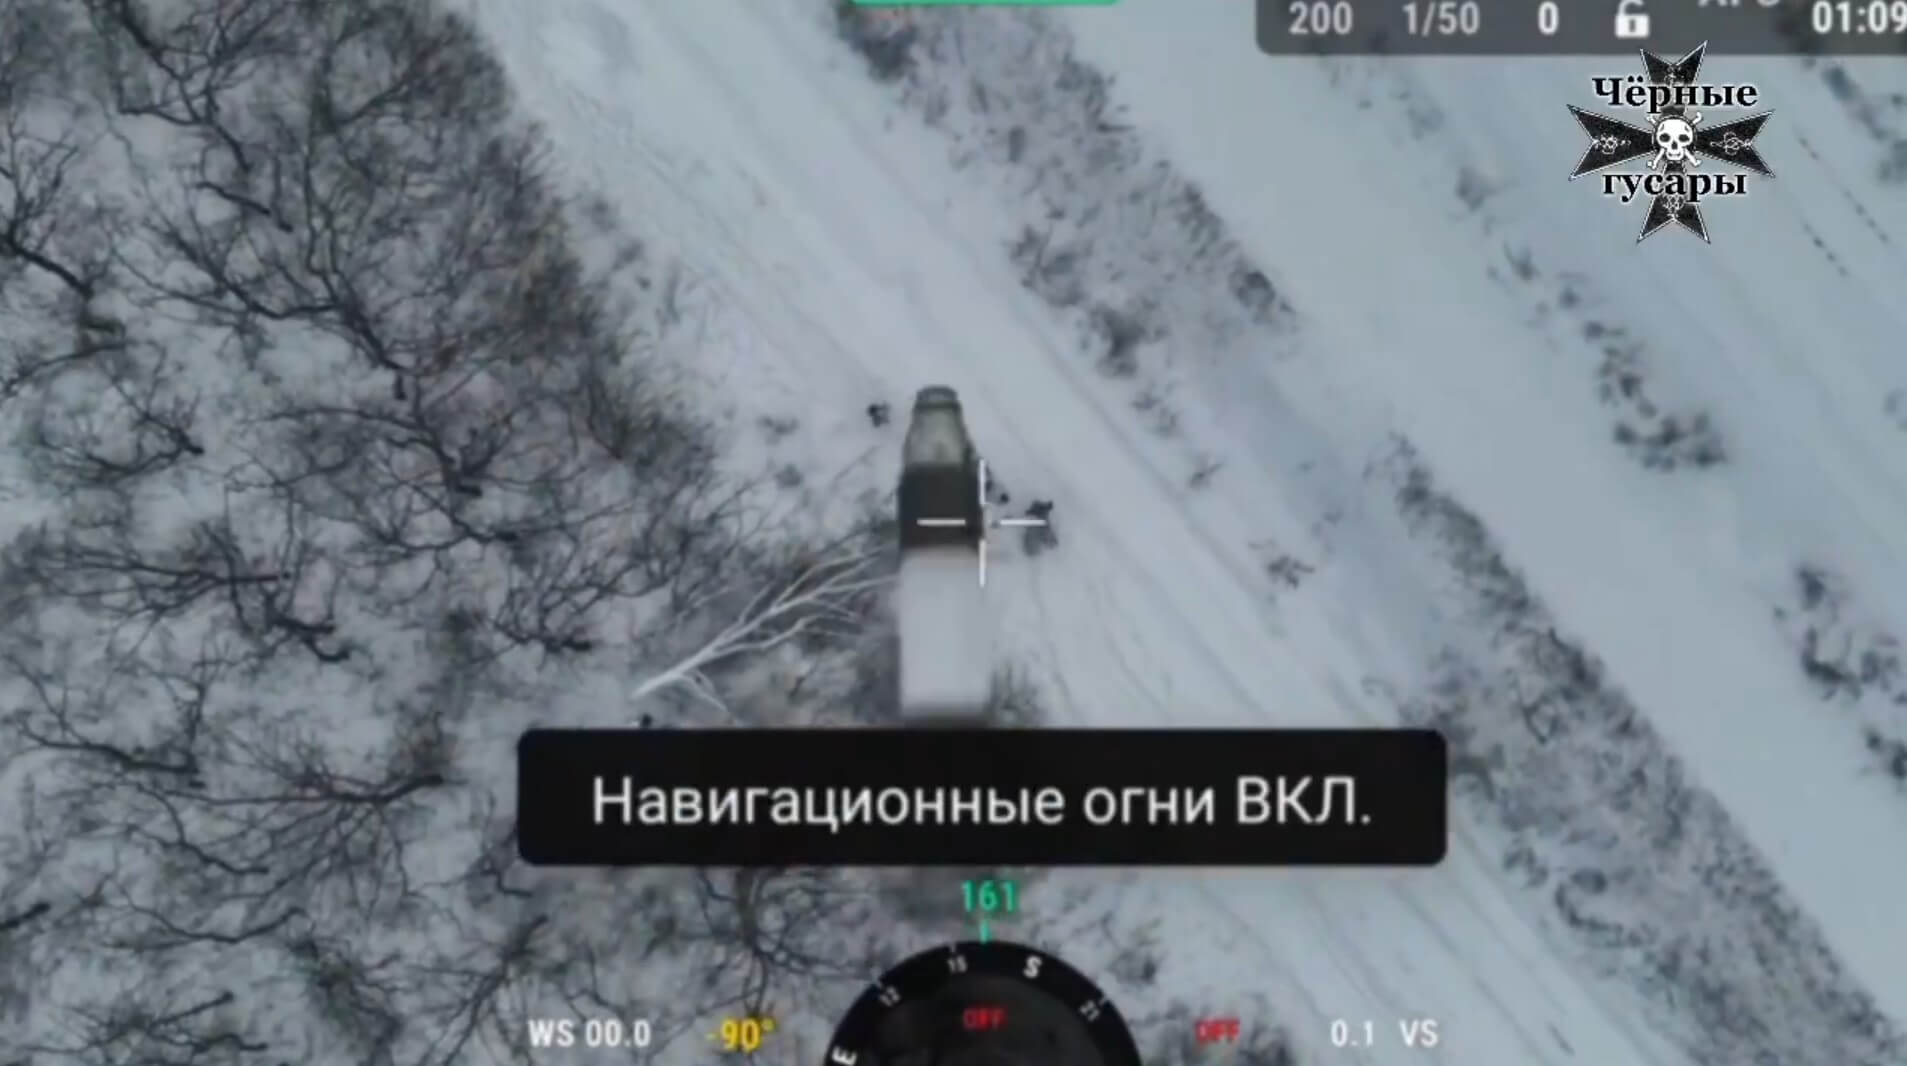 Russian drone drops bomb onto Ukrainian soldiers